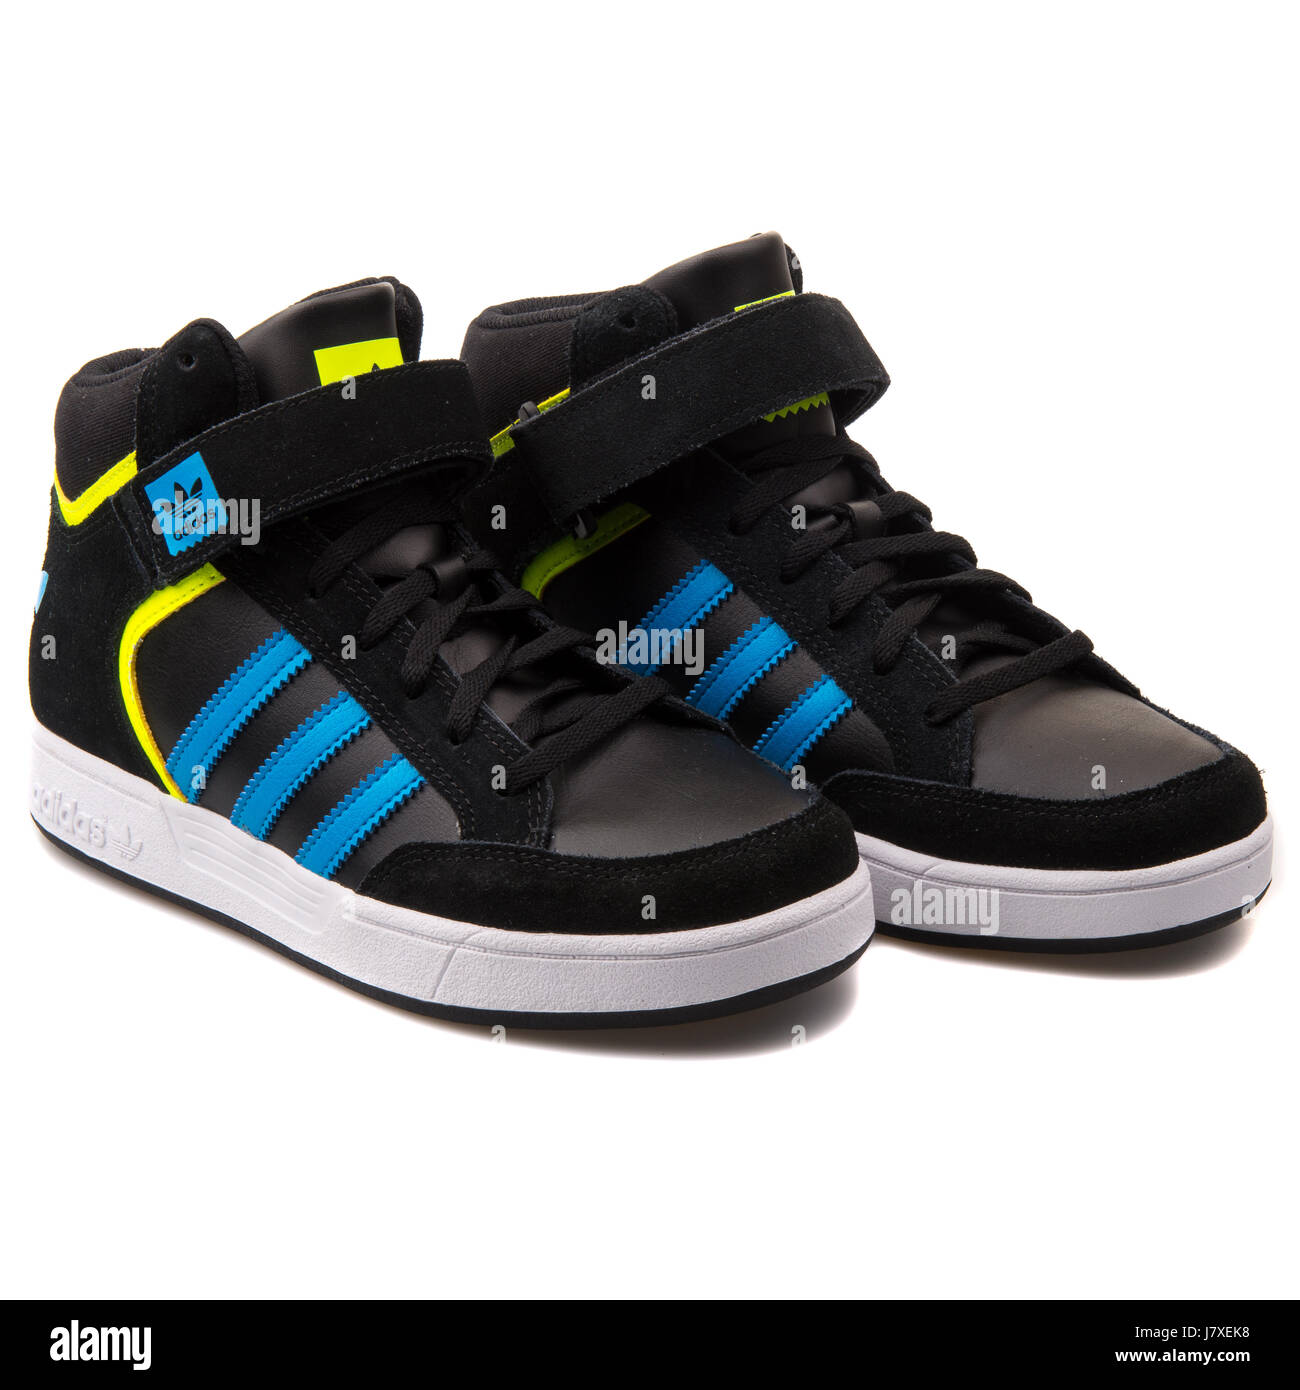 Adidas Varial Mid J Kids Black Sneakers - Q16697 Stock Photo - Alamy